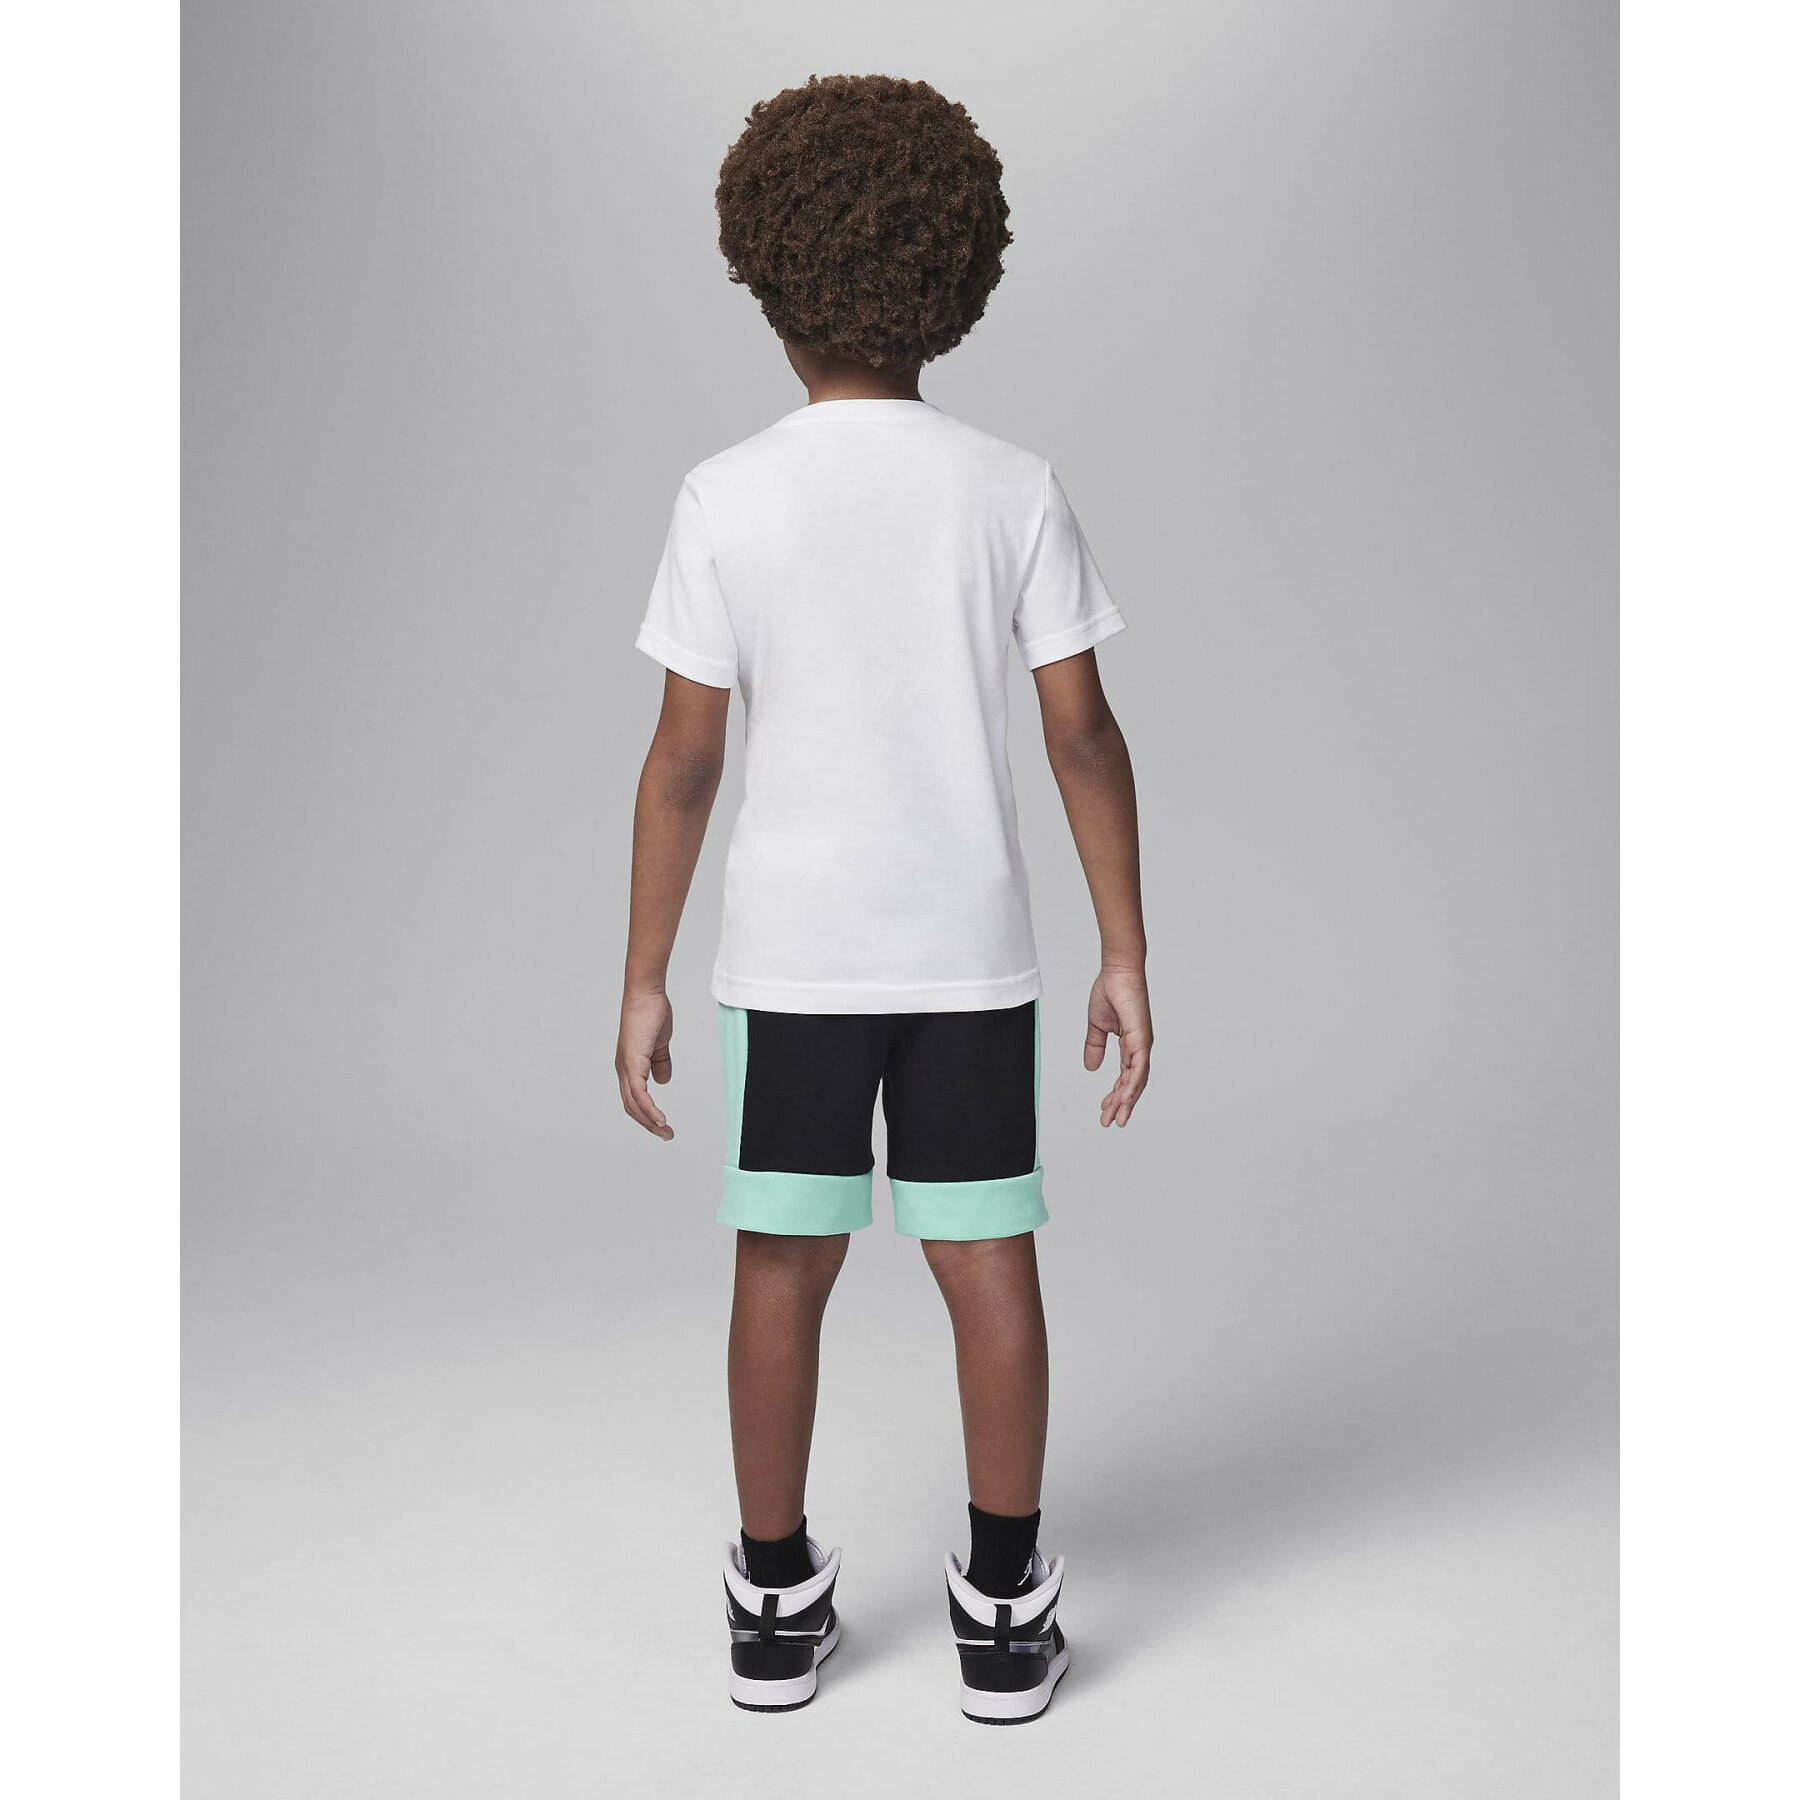 Children's shorts Jordan Galaxy